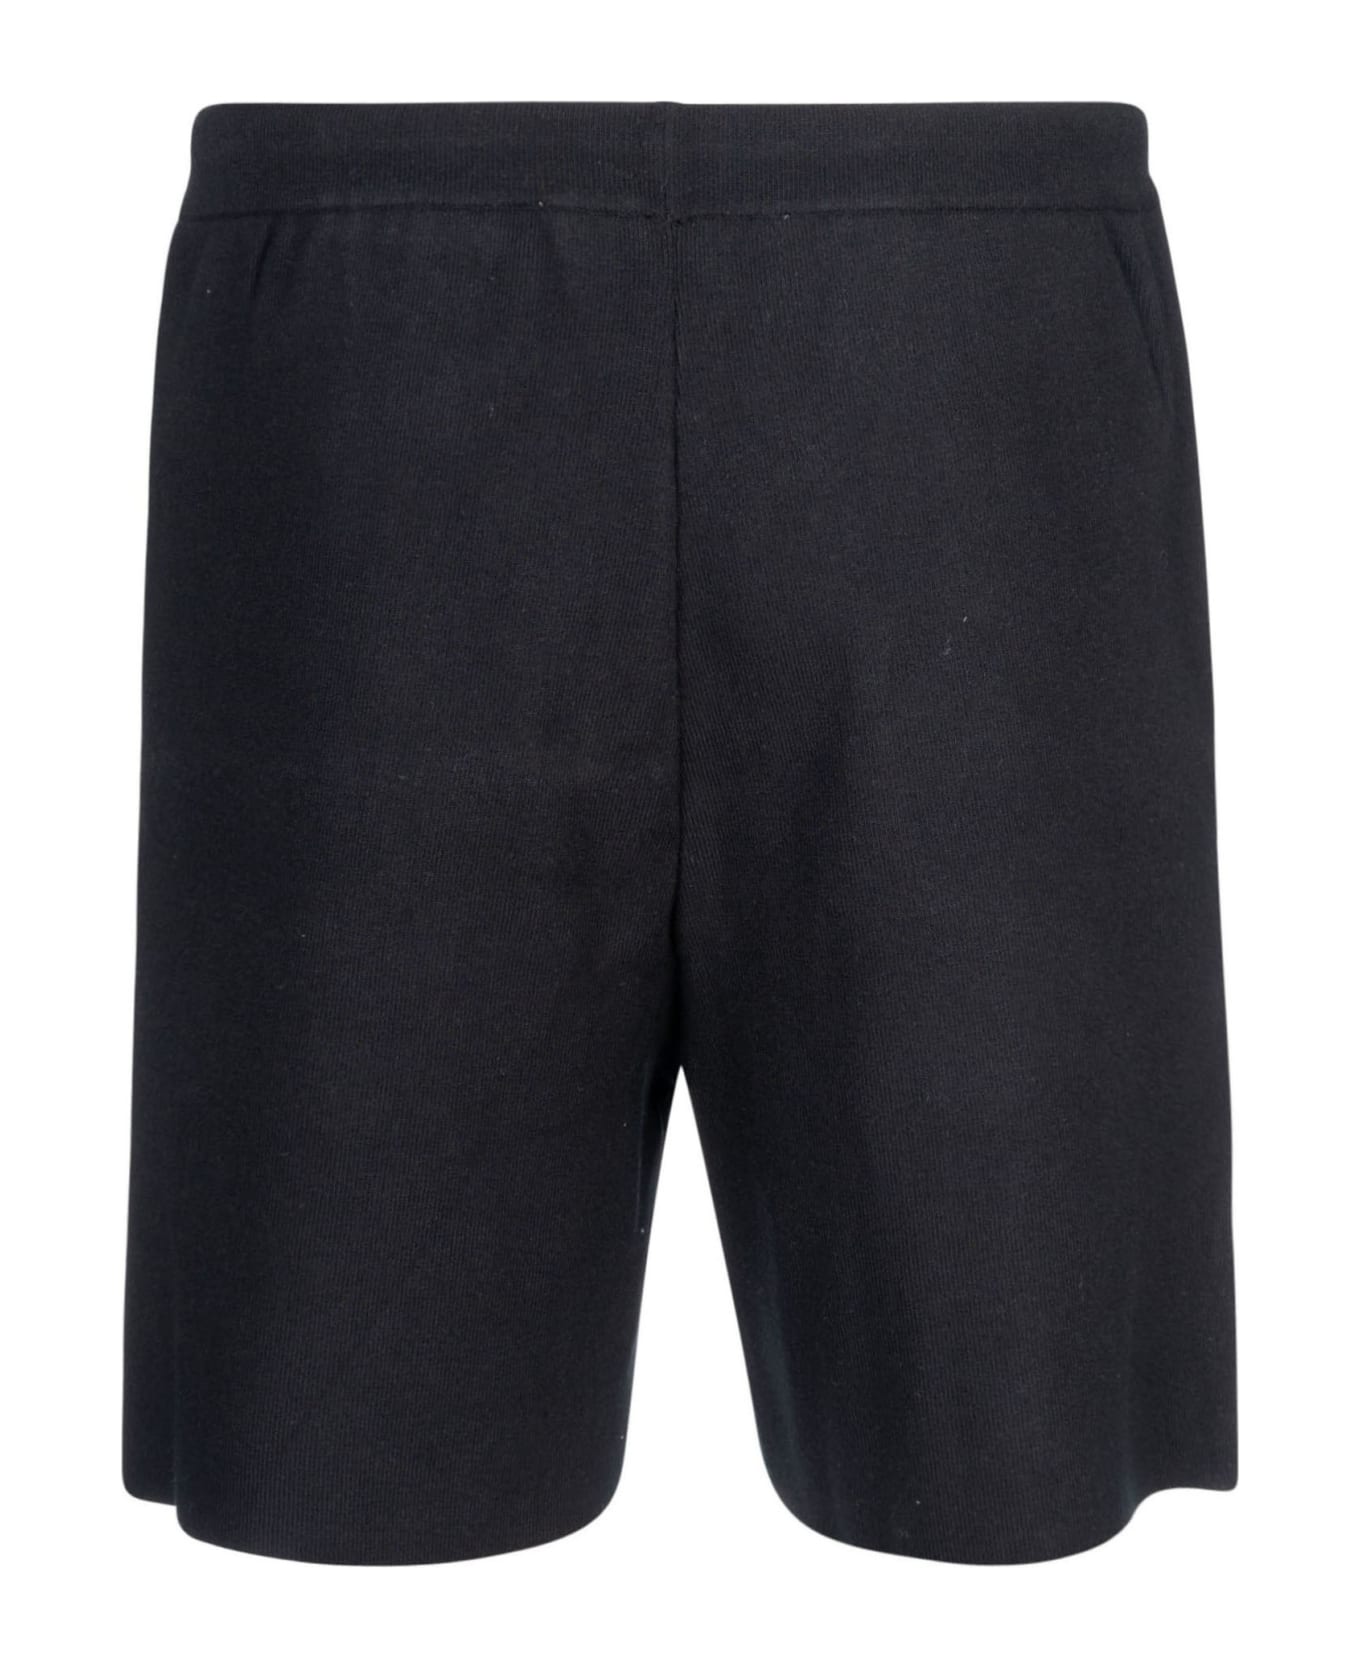 1017 ALYX 9SM Laced Shorts - Black